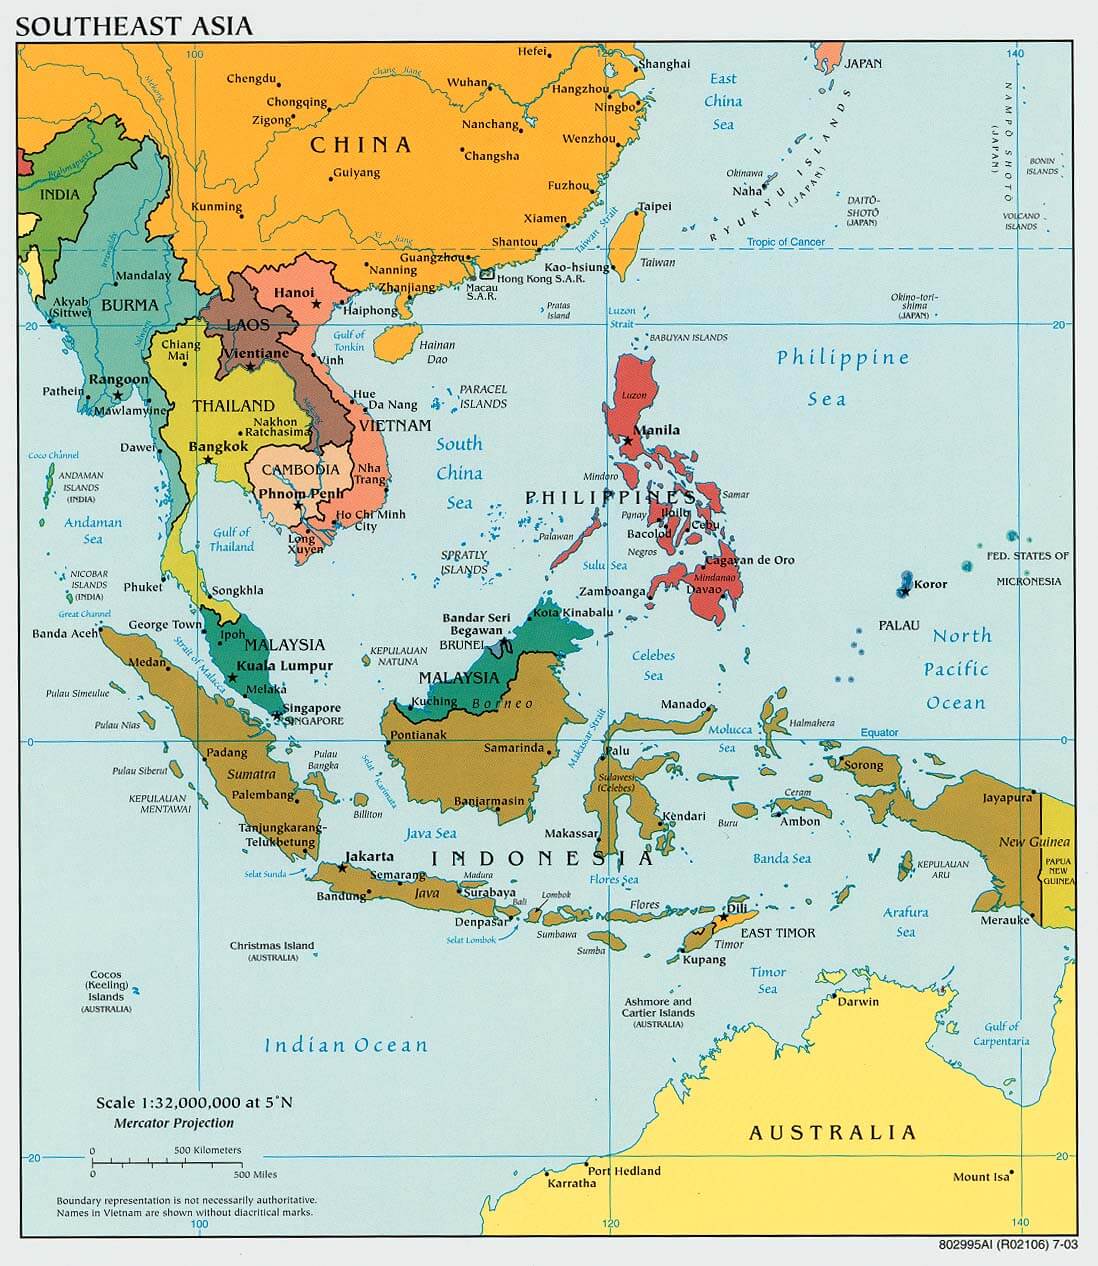 southeast asia political map 2003